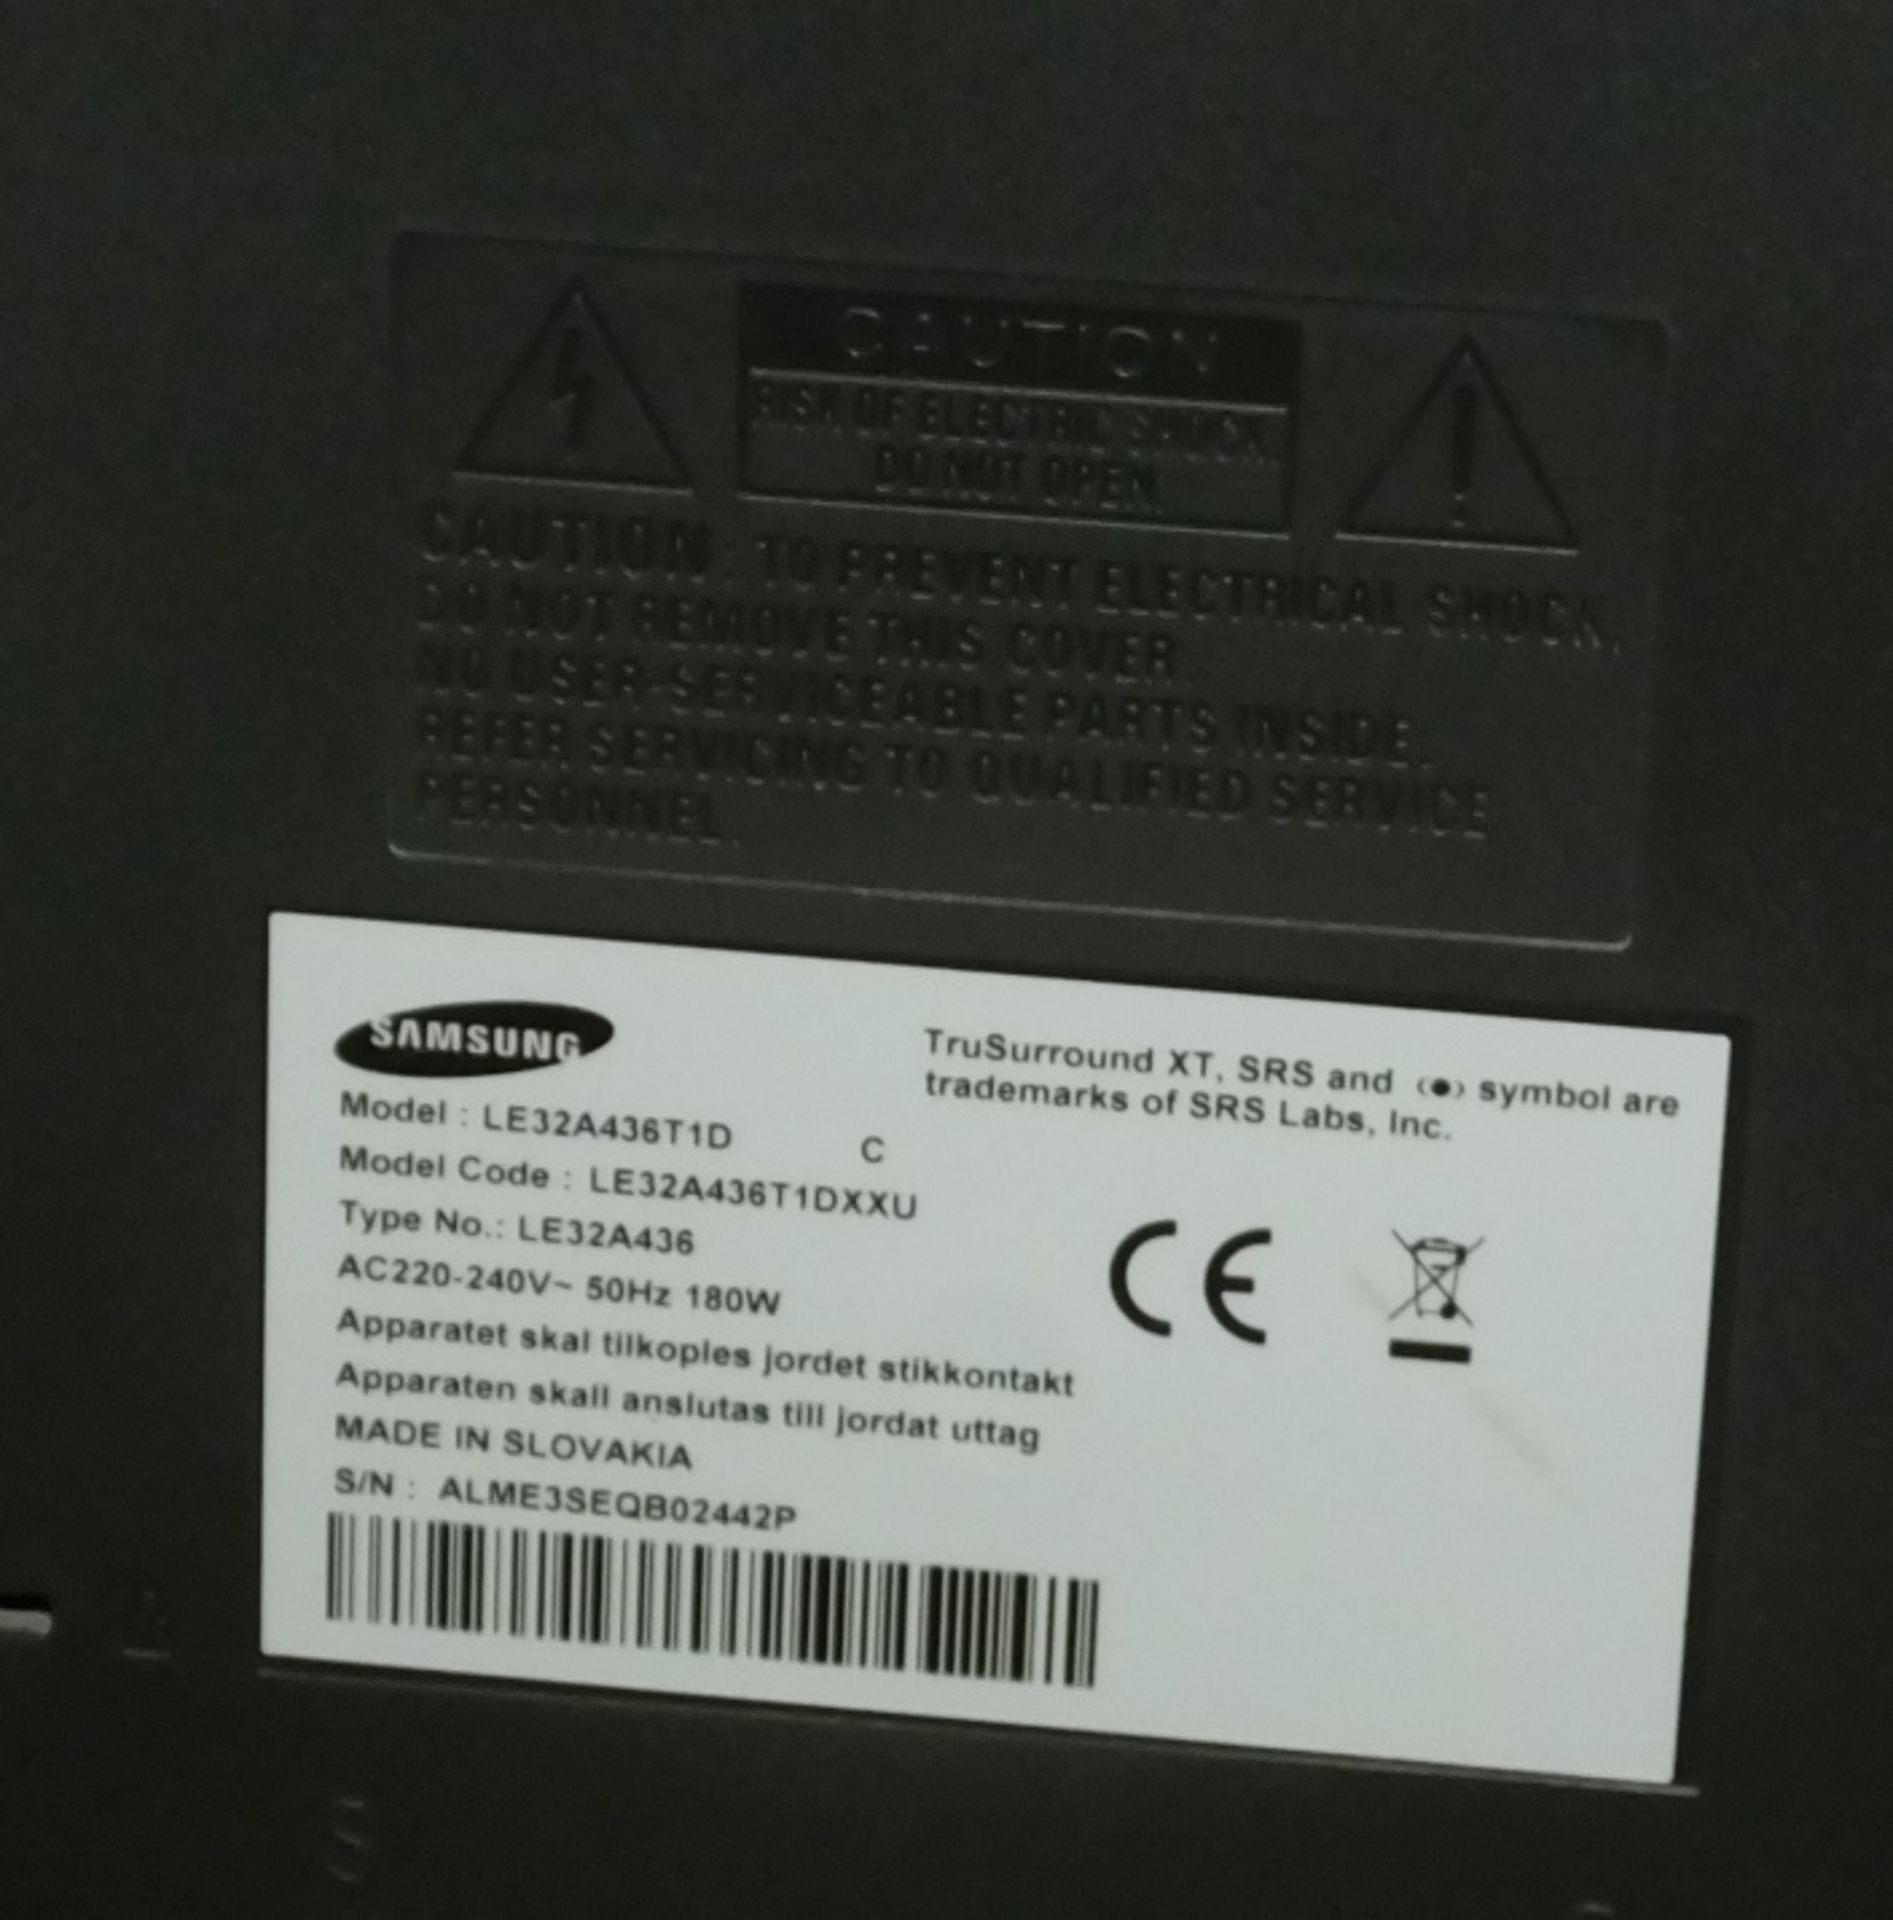 Samsung 32 inch flat screen television - Model LE32A436T1D - Type LE32A436 - AC 220-240V - Bild 3 aus 6